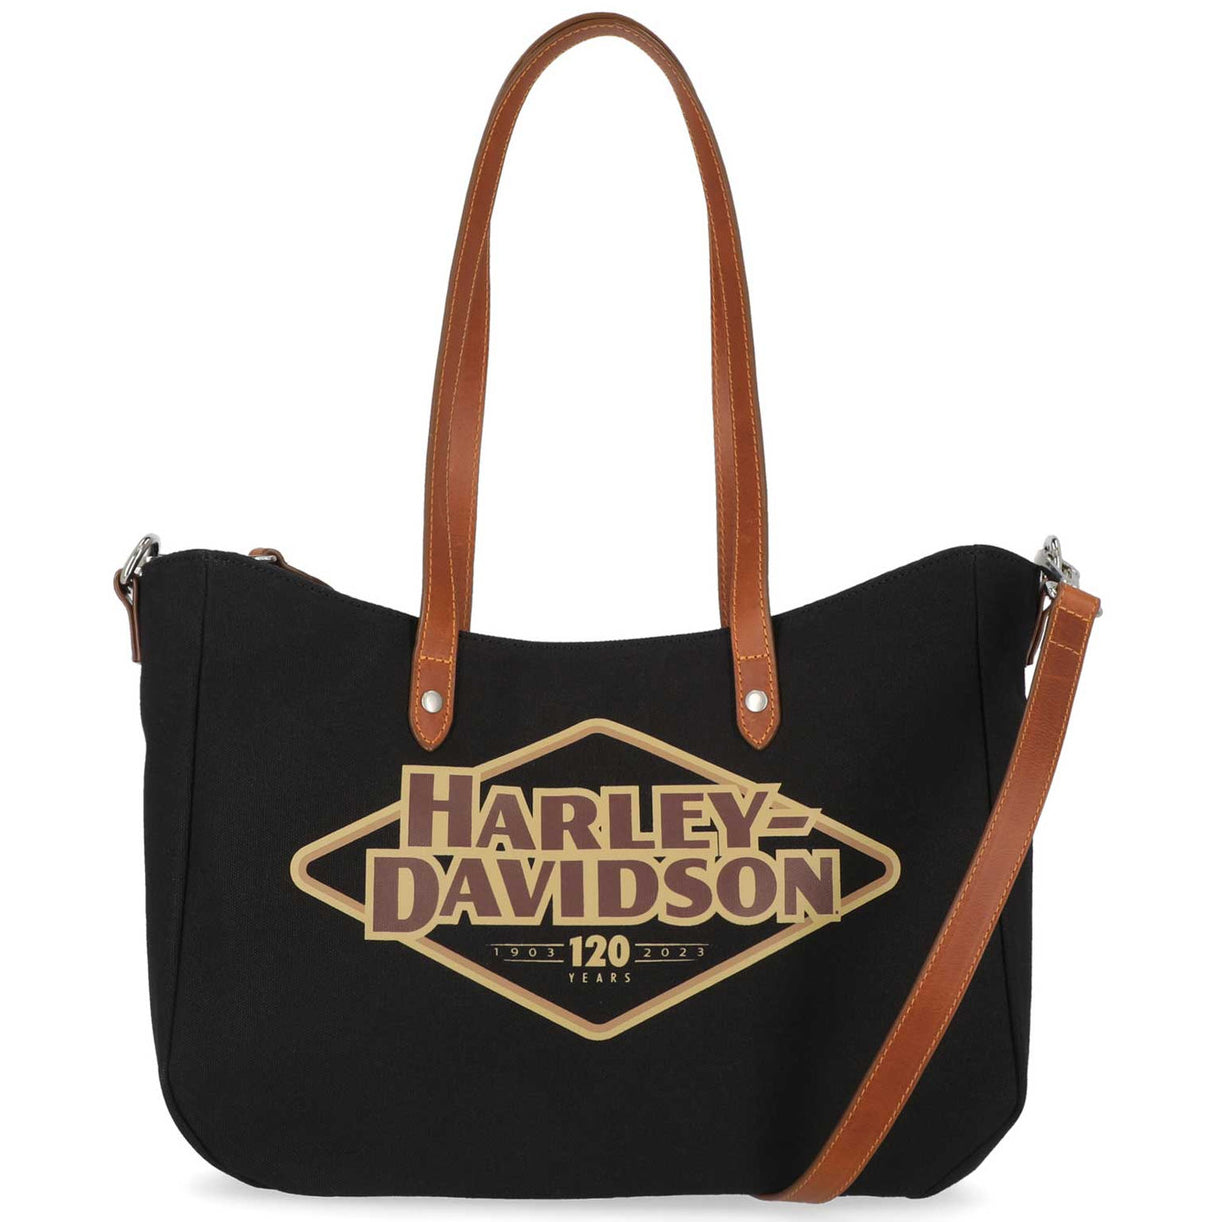 Harley Davidson Women's Bag - Black